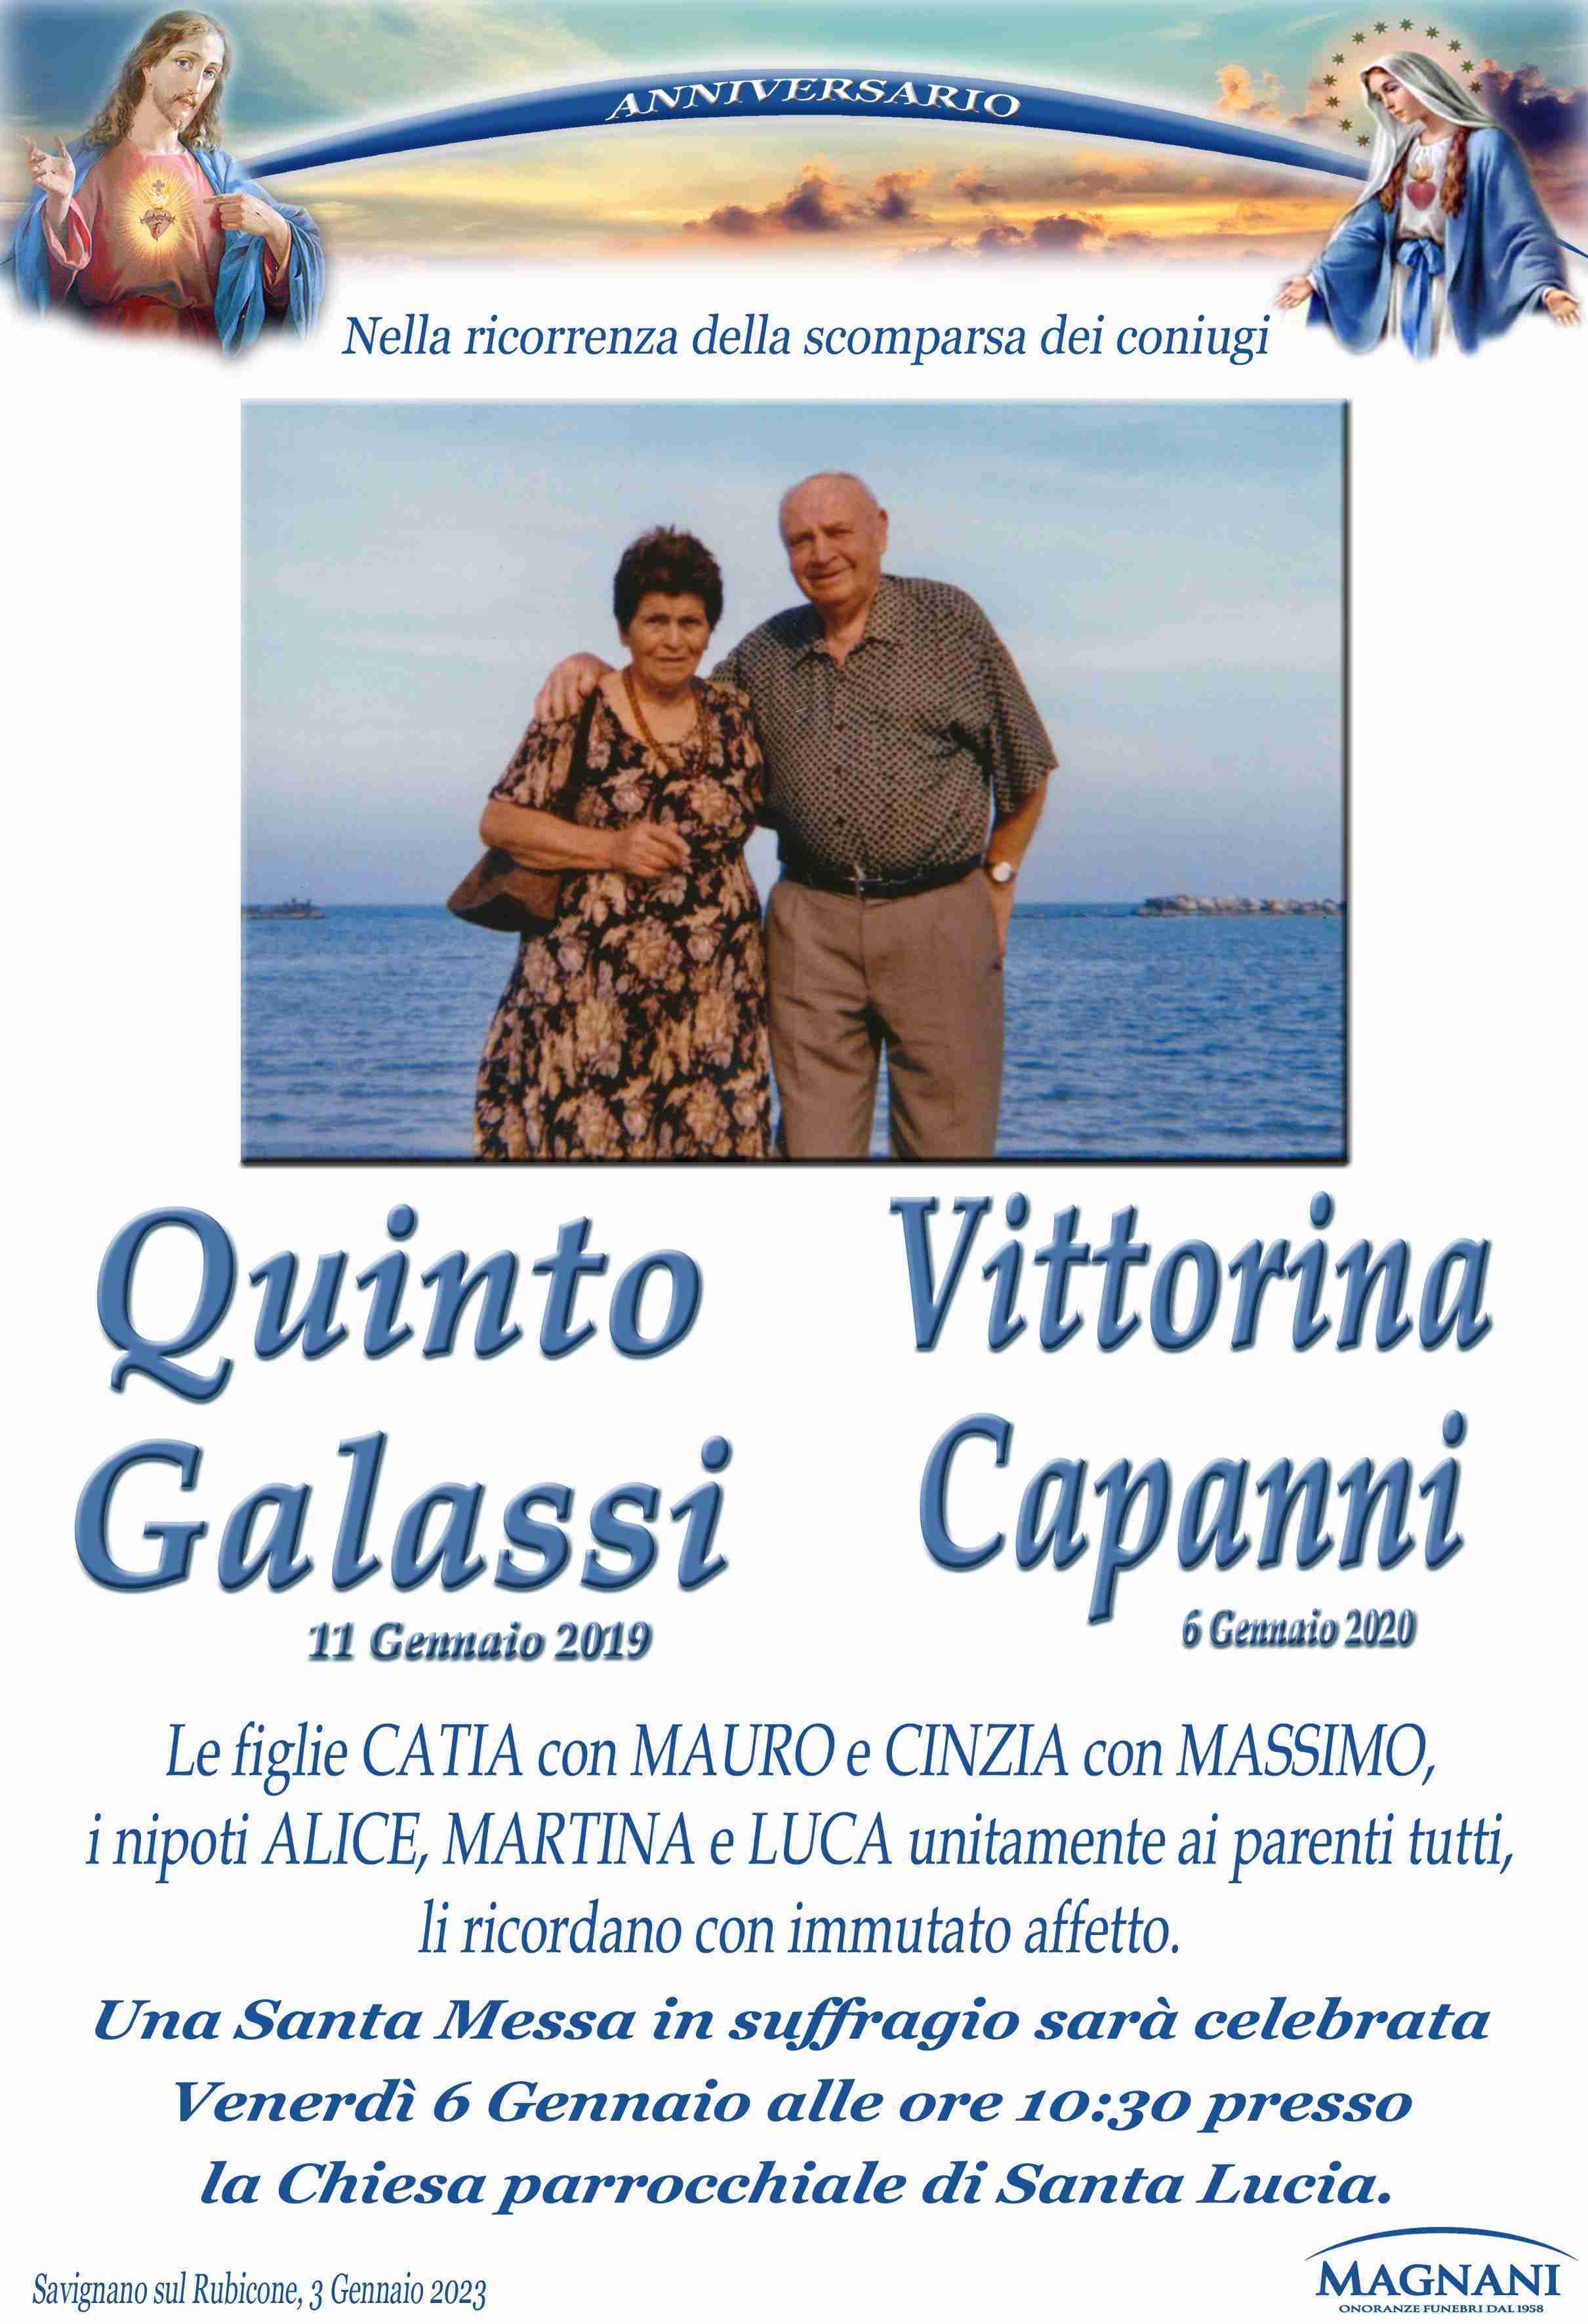 Quinto Galassi e Vittorina Capanni